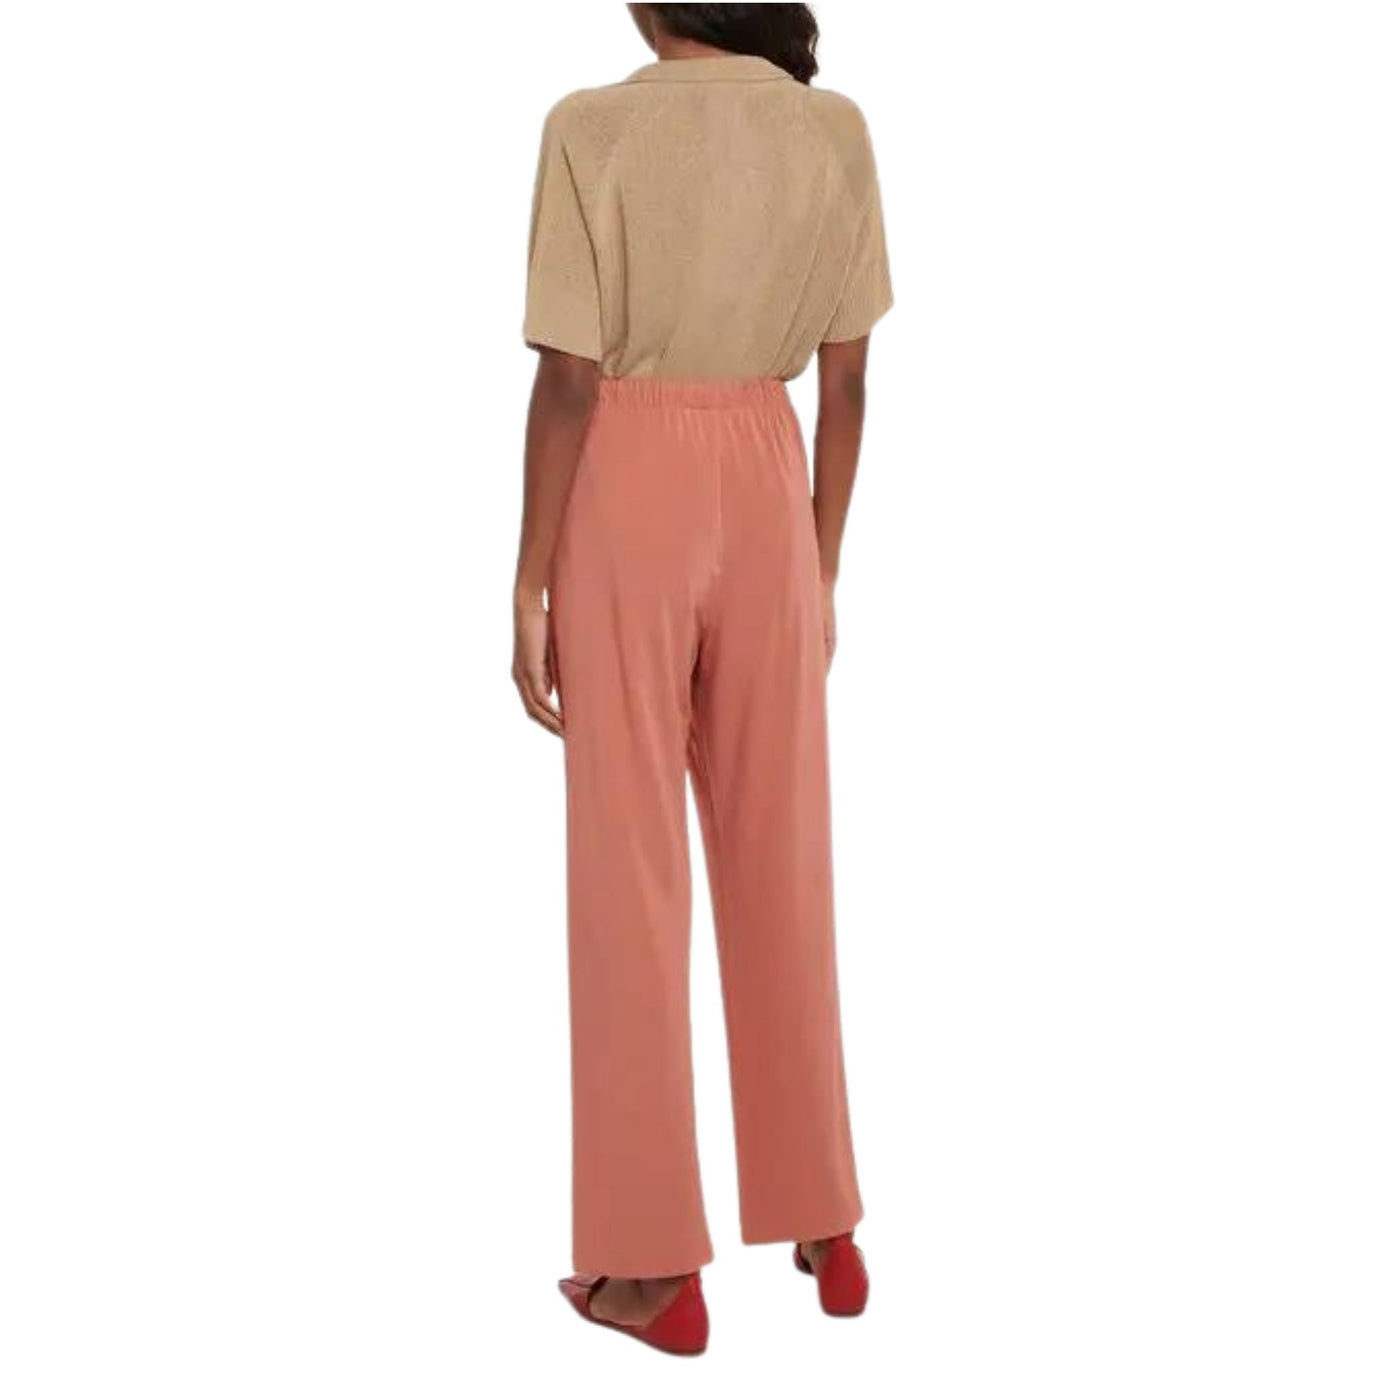 Orbita women's trousers in viscose and elasticated waist